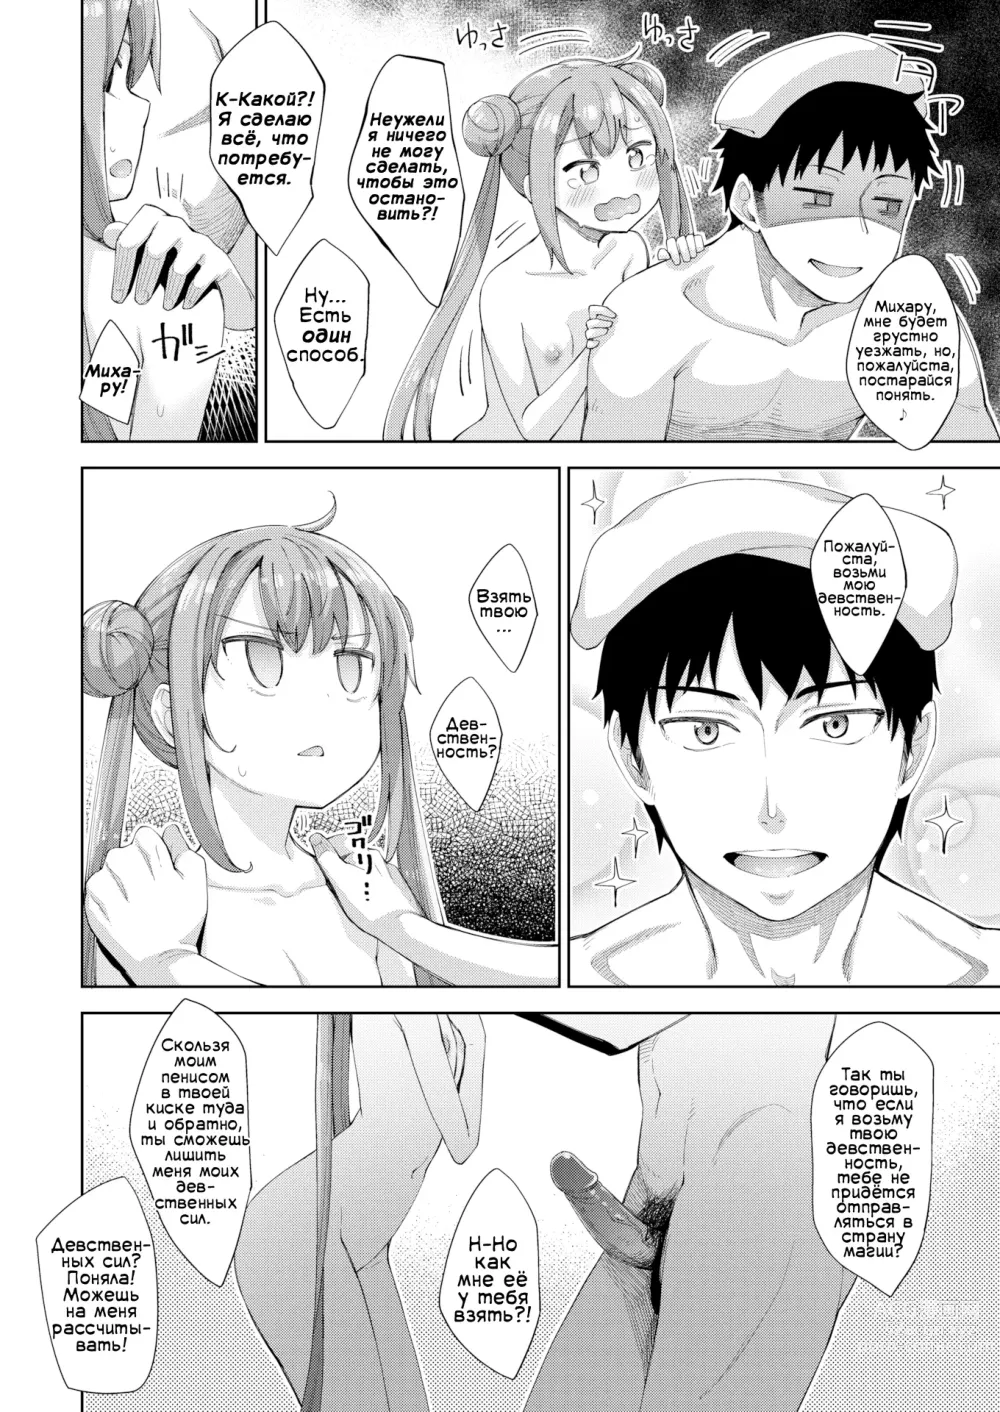 Page 6 of manga Aho No Ko!